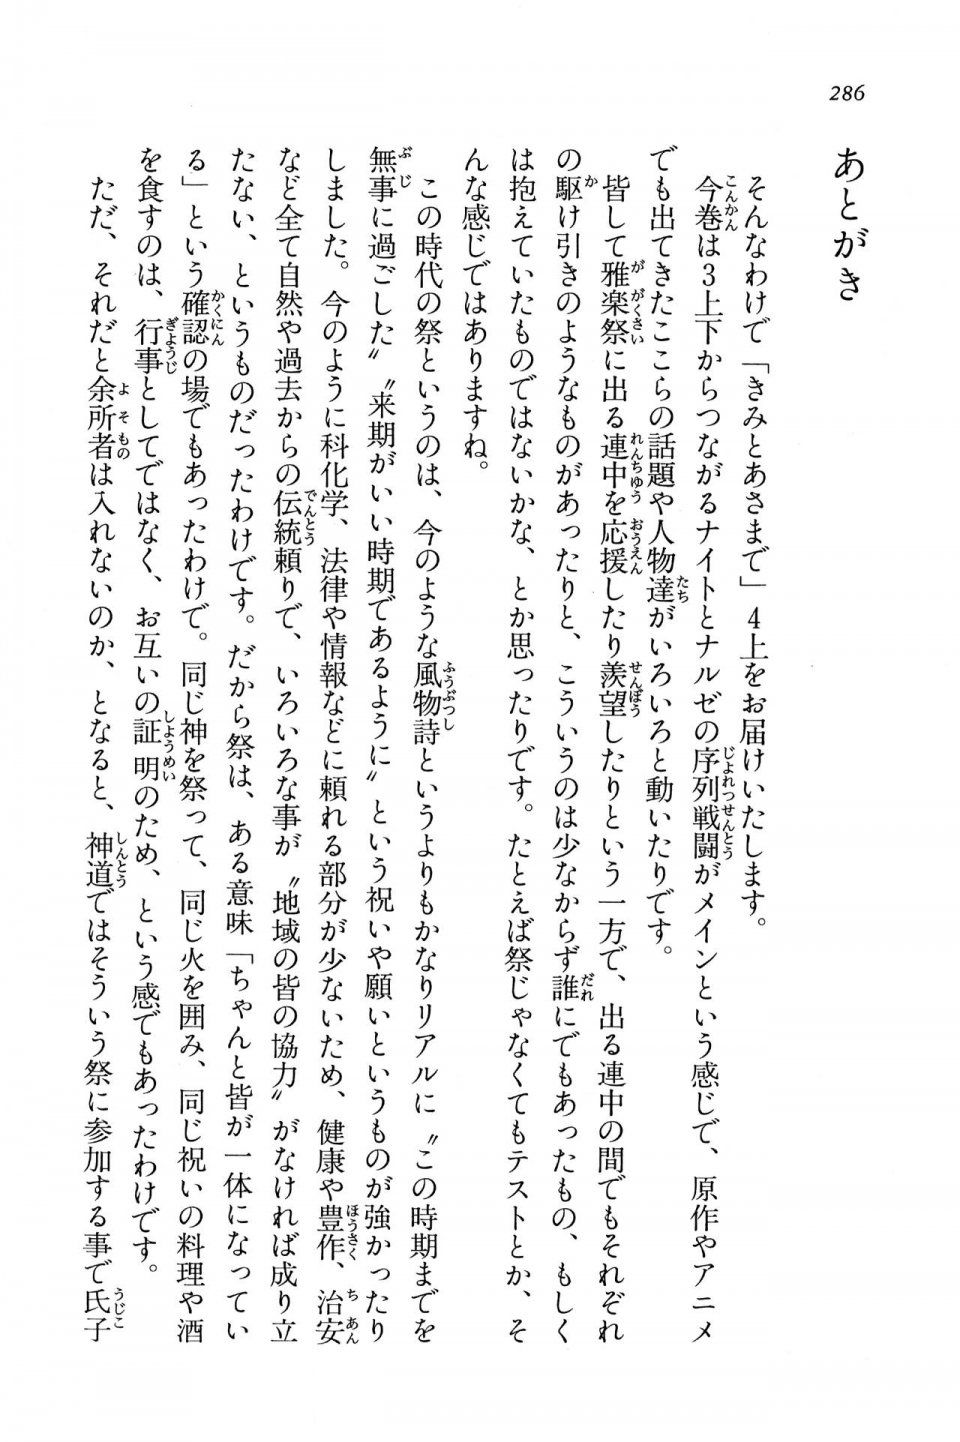 Kyoukai Senjou no Horizon BD Special Mininovel Vol 7(4A) - Photo #290